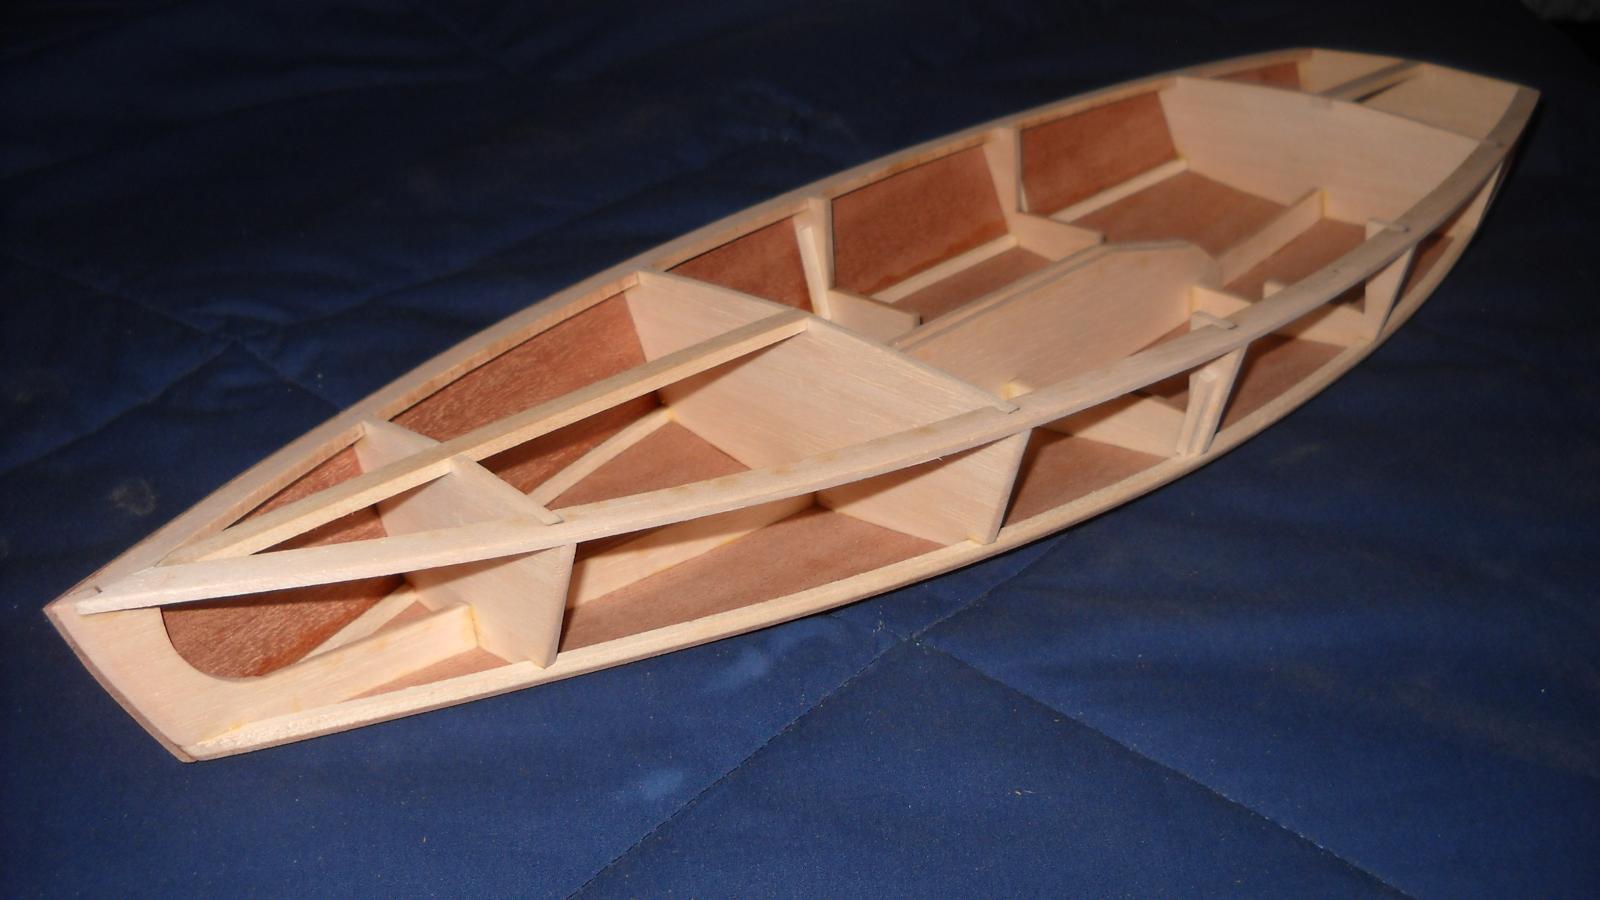 lightning sailboat kit